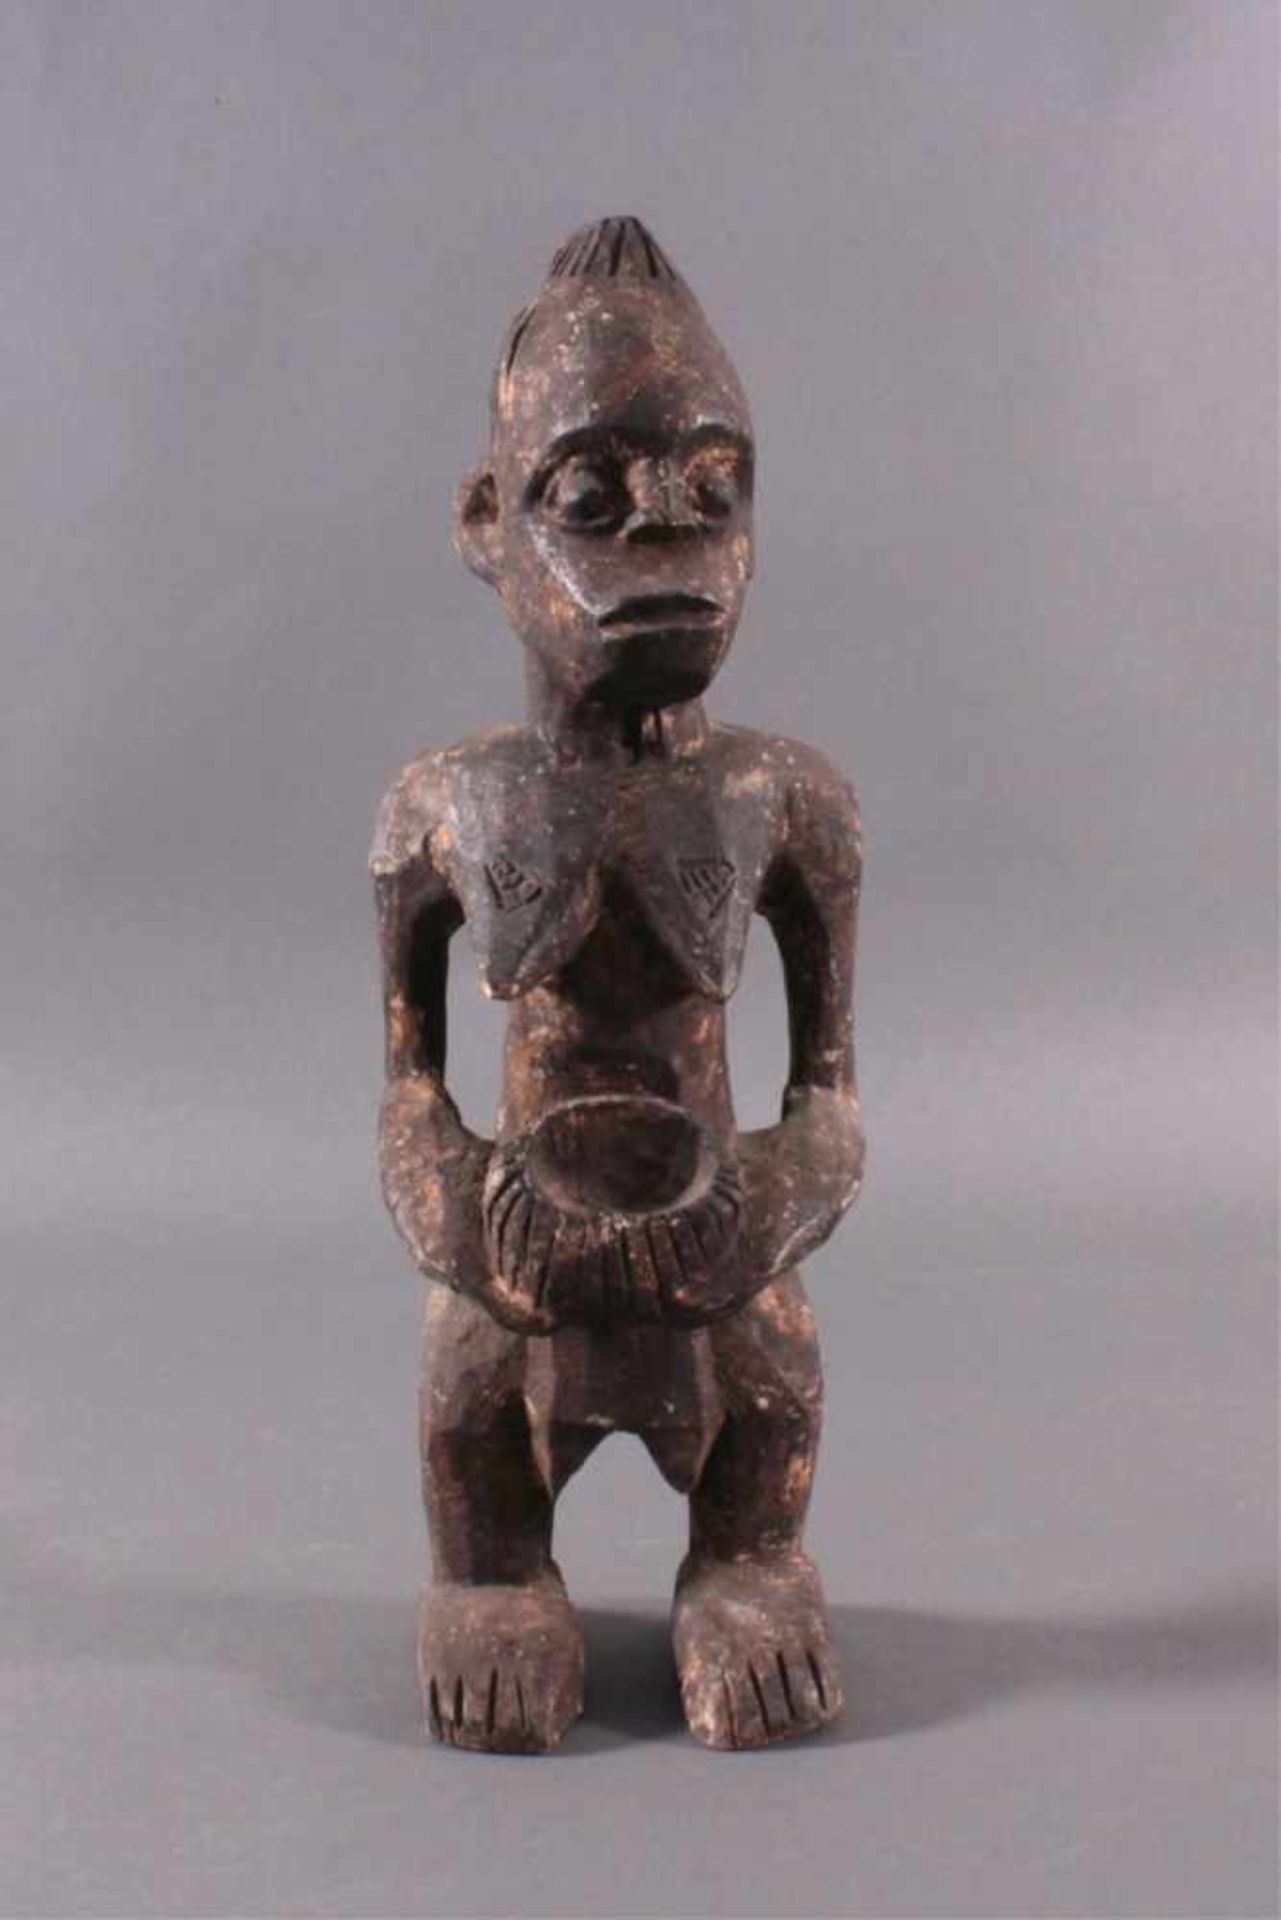 Afrikanische Skulptur mit Kalebasse, 1. Hälfte 20. Jh.,Südafrika, dunkle Patina, Frau eine Kalebasse